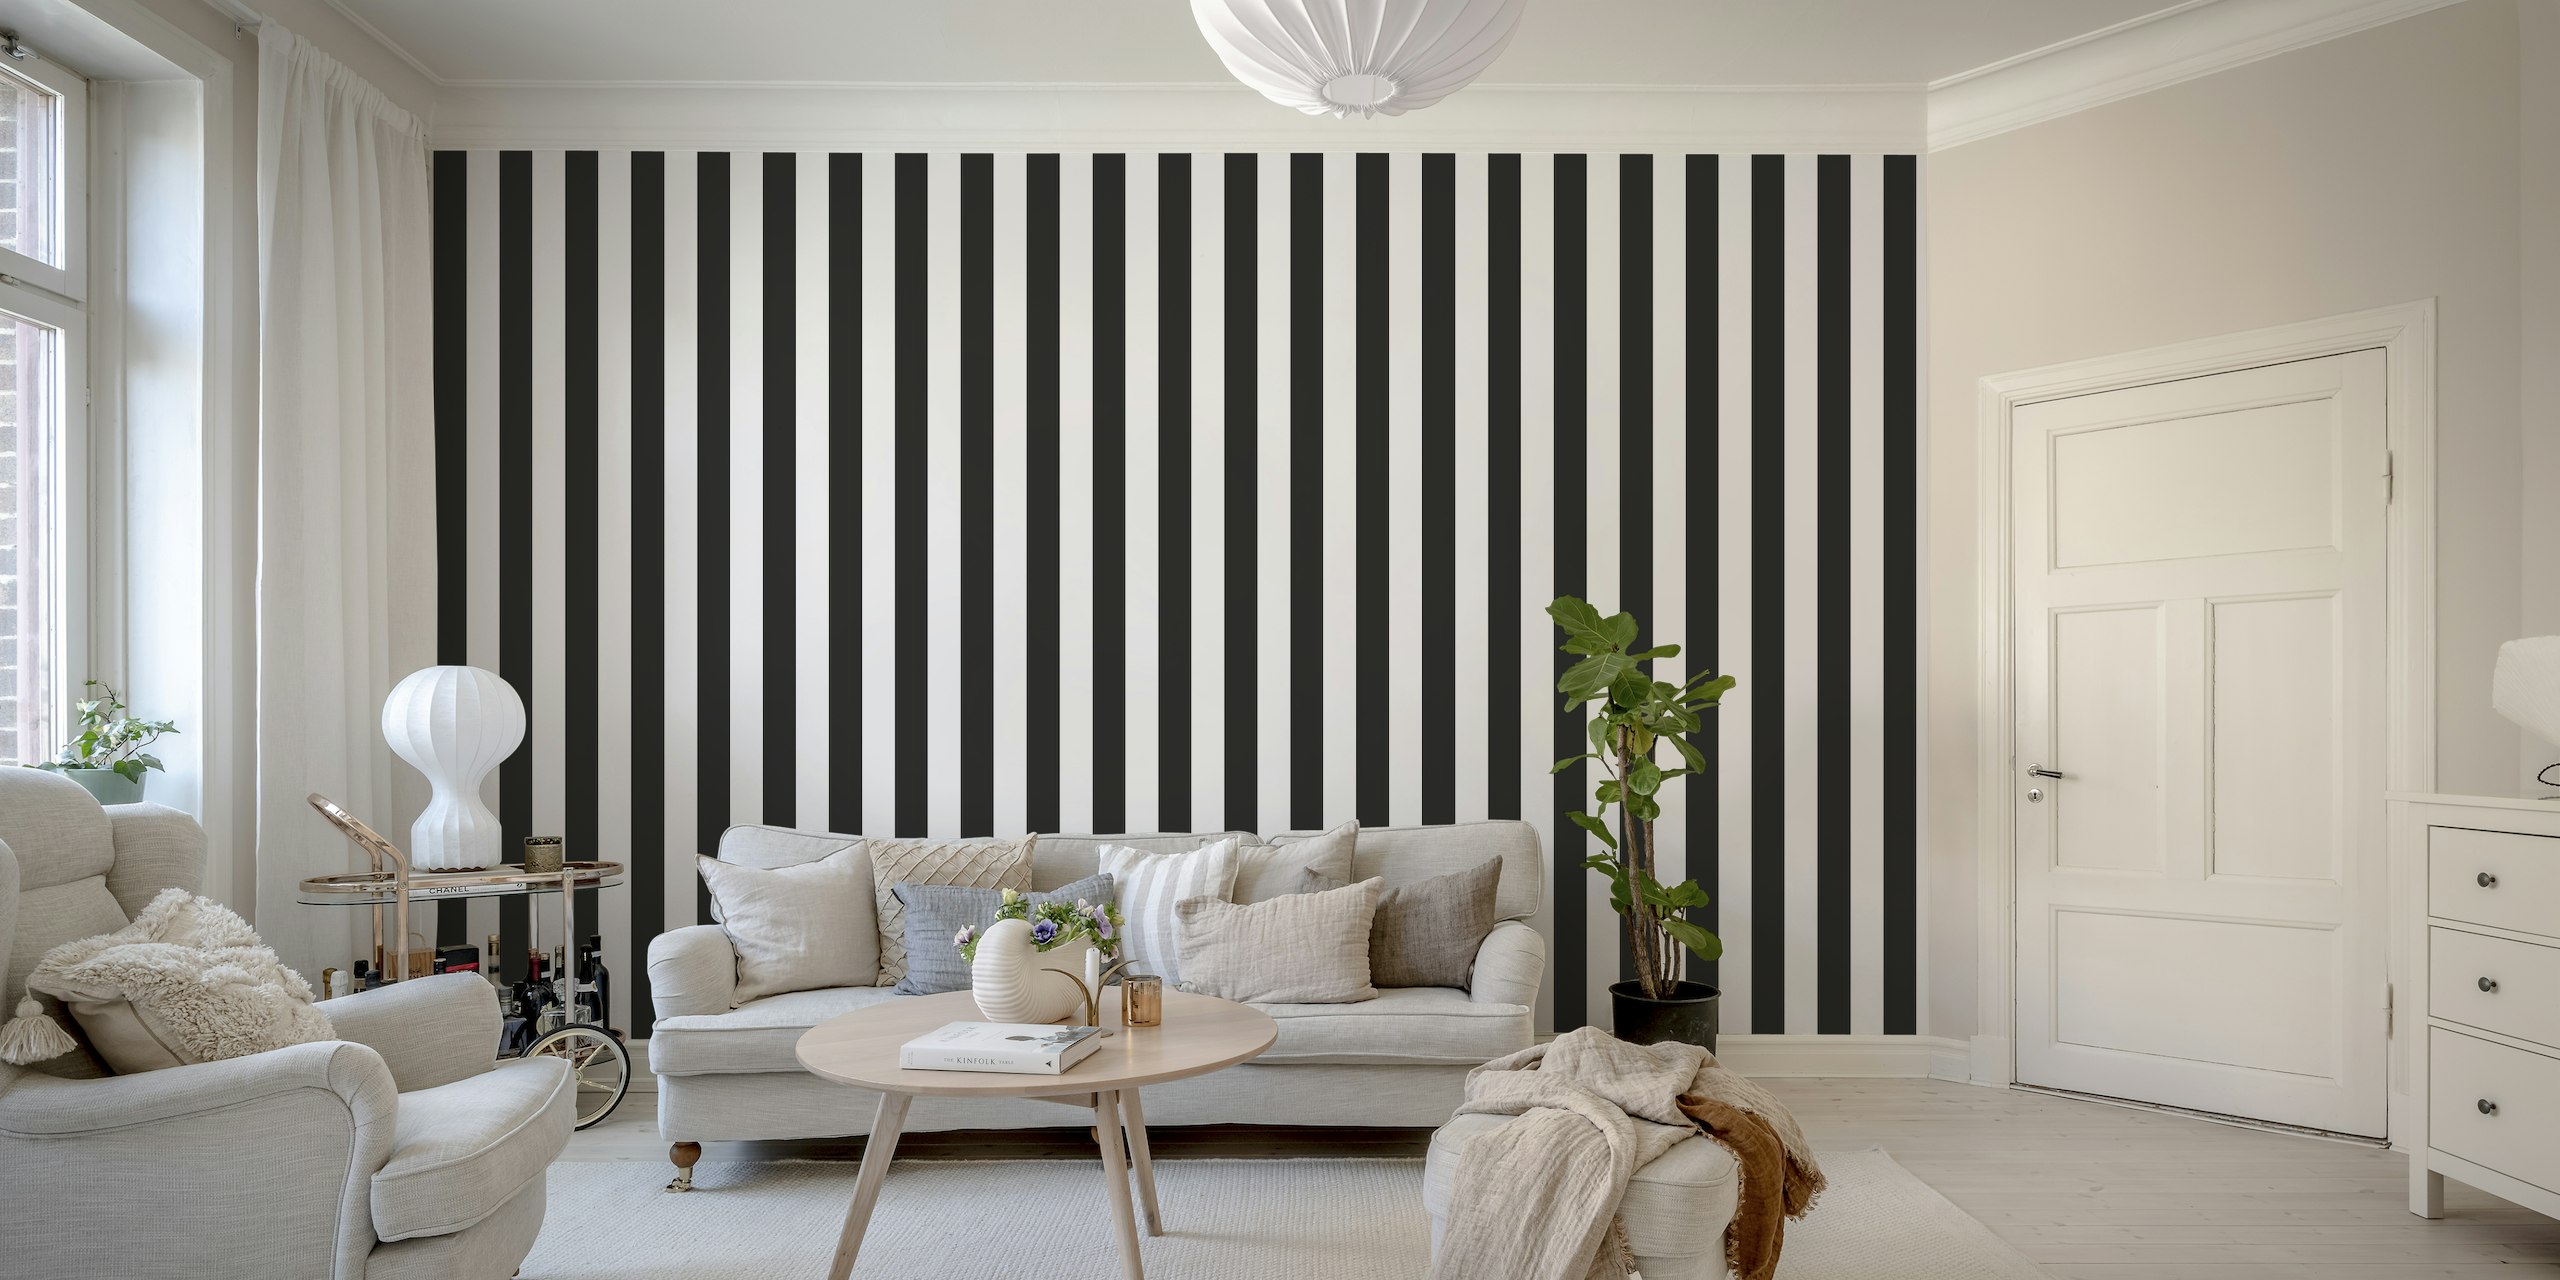 Black and white stripe pattern tapetit